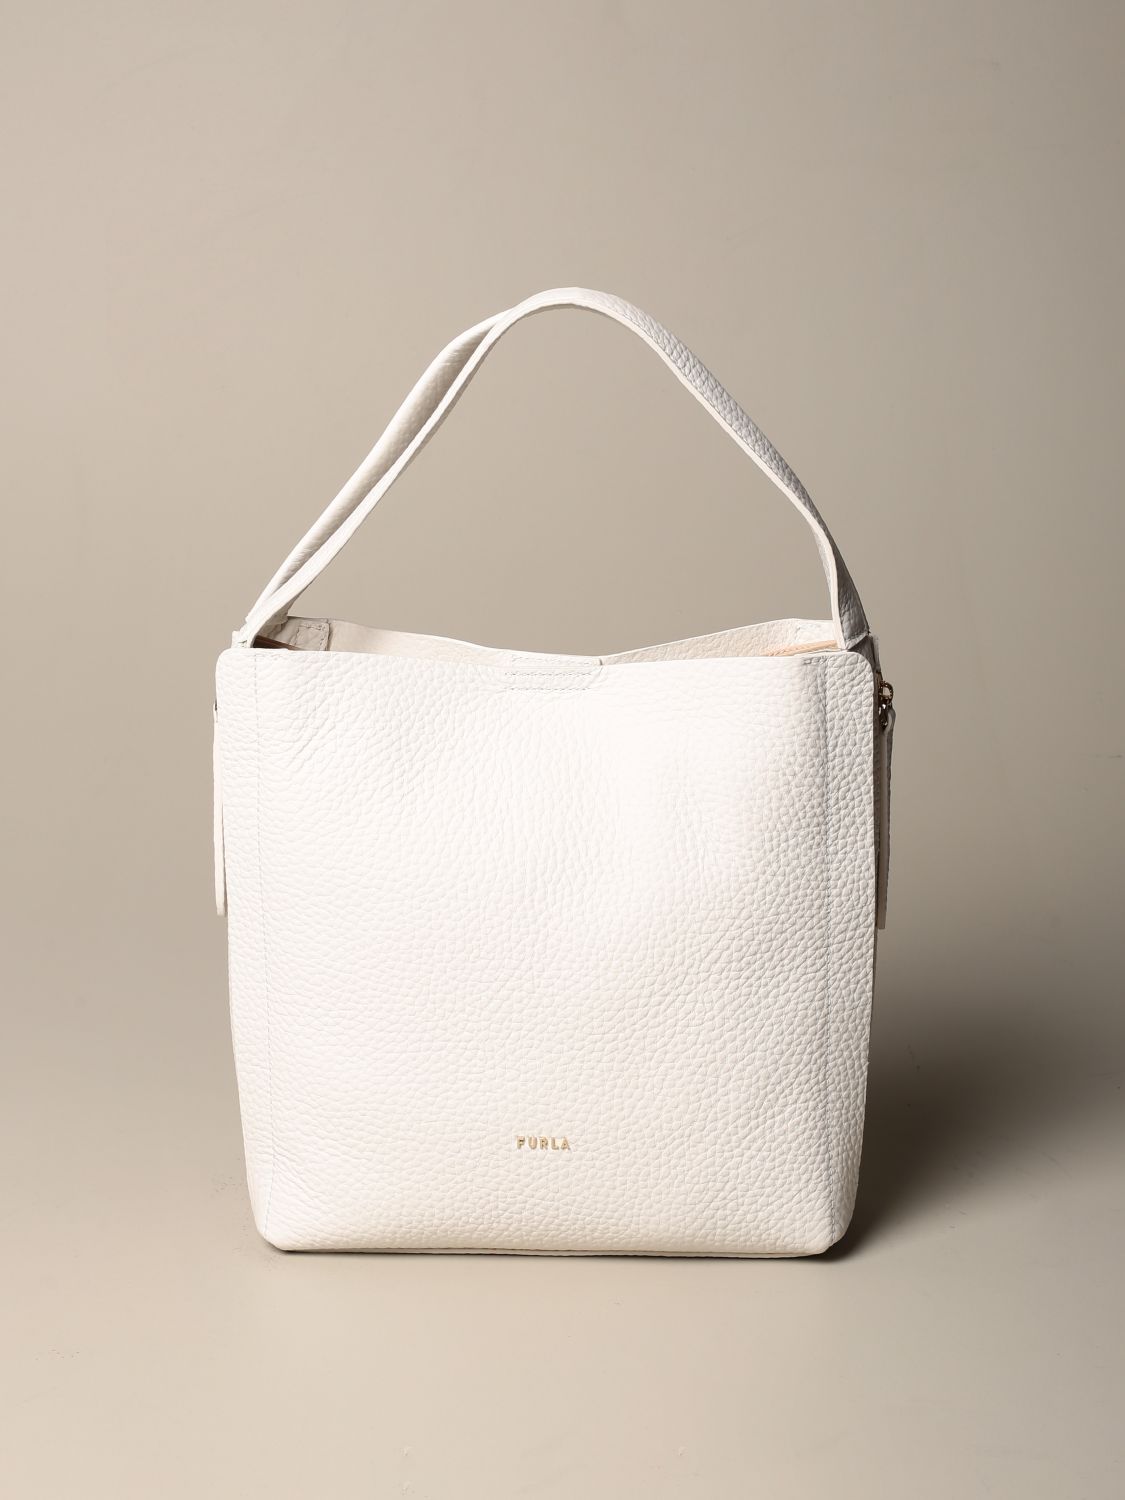 FURLA: Grace hobo bag in grained leather - Yellow Cream  Furla shoulder bag  BARVFGC NVD000 online at